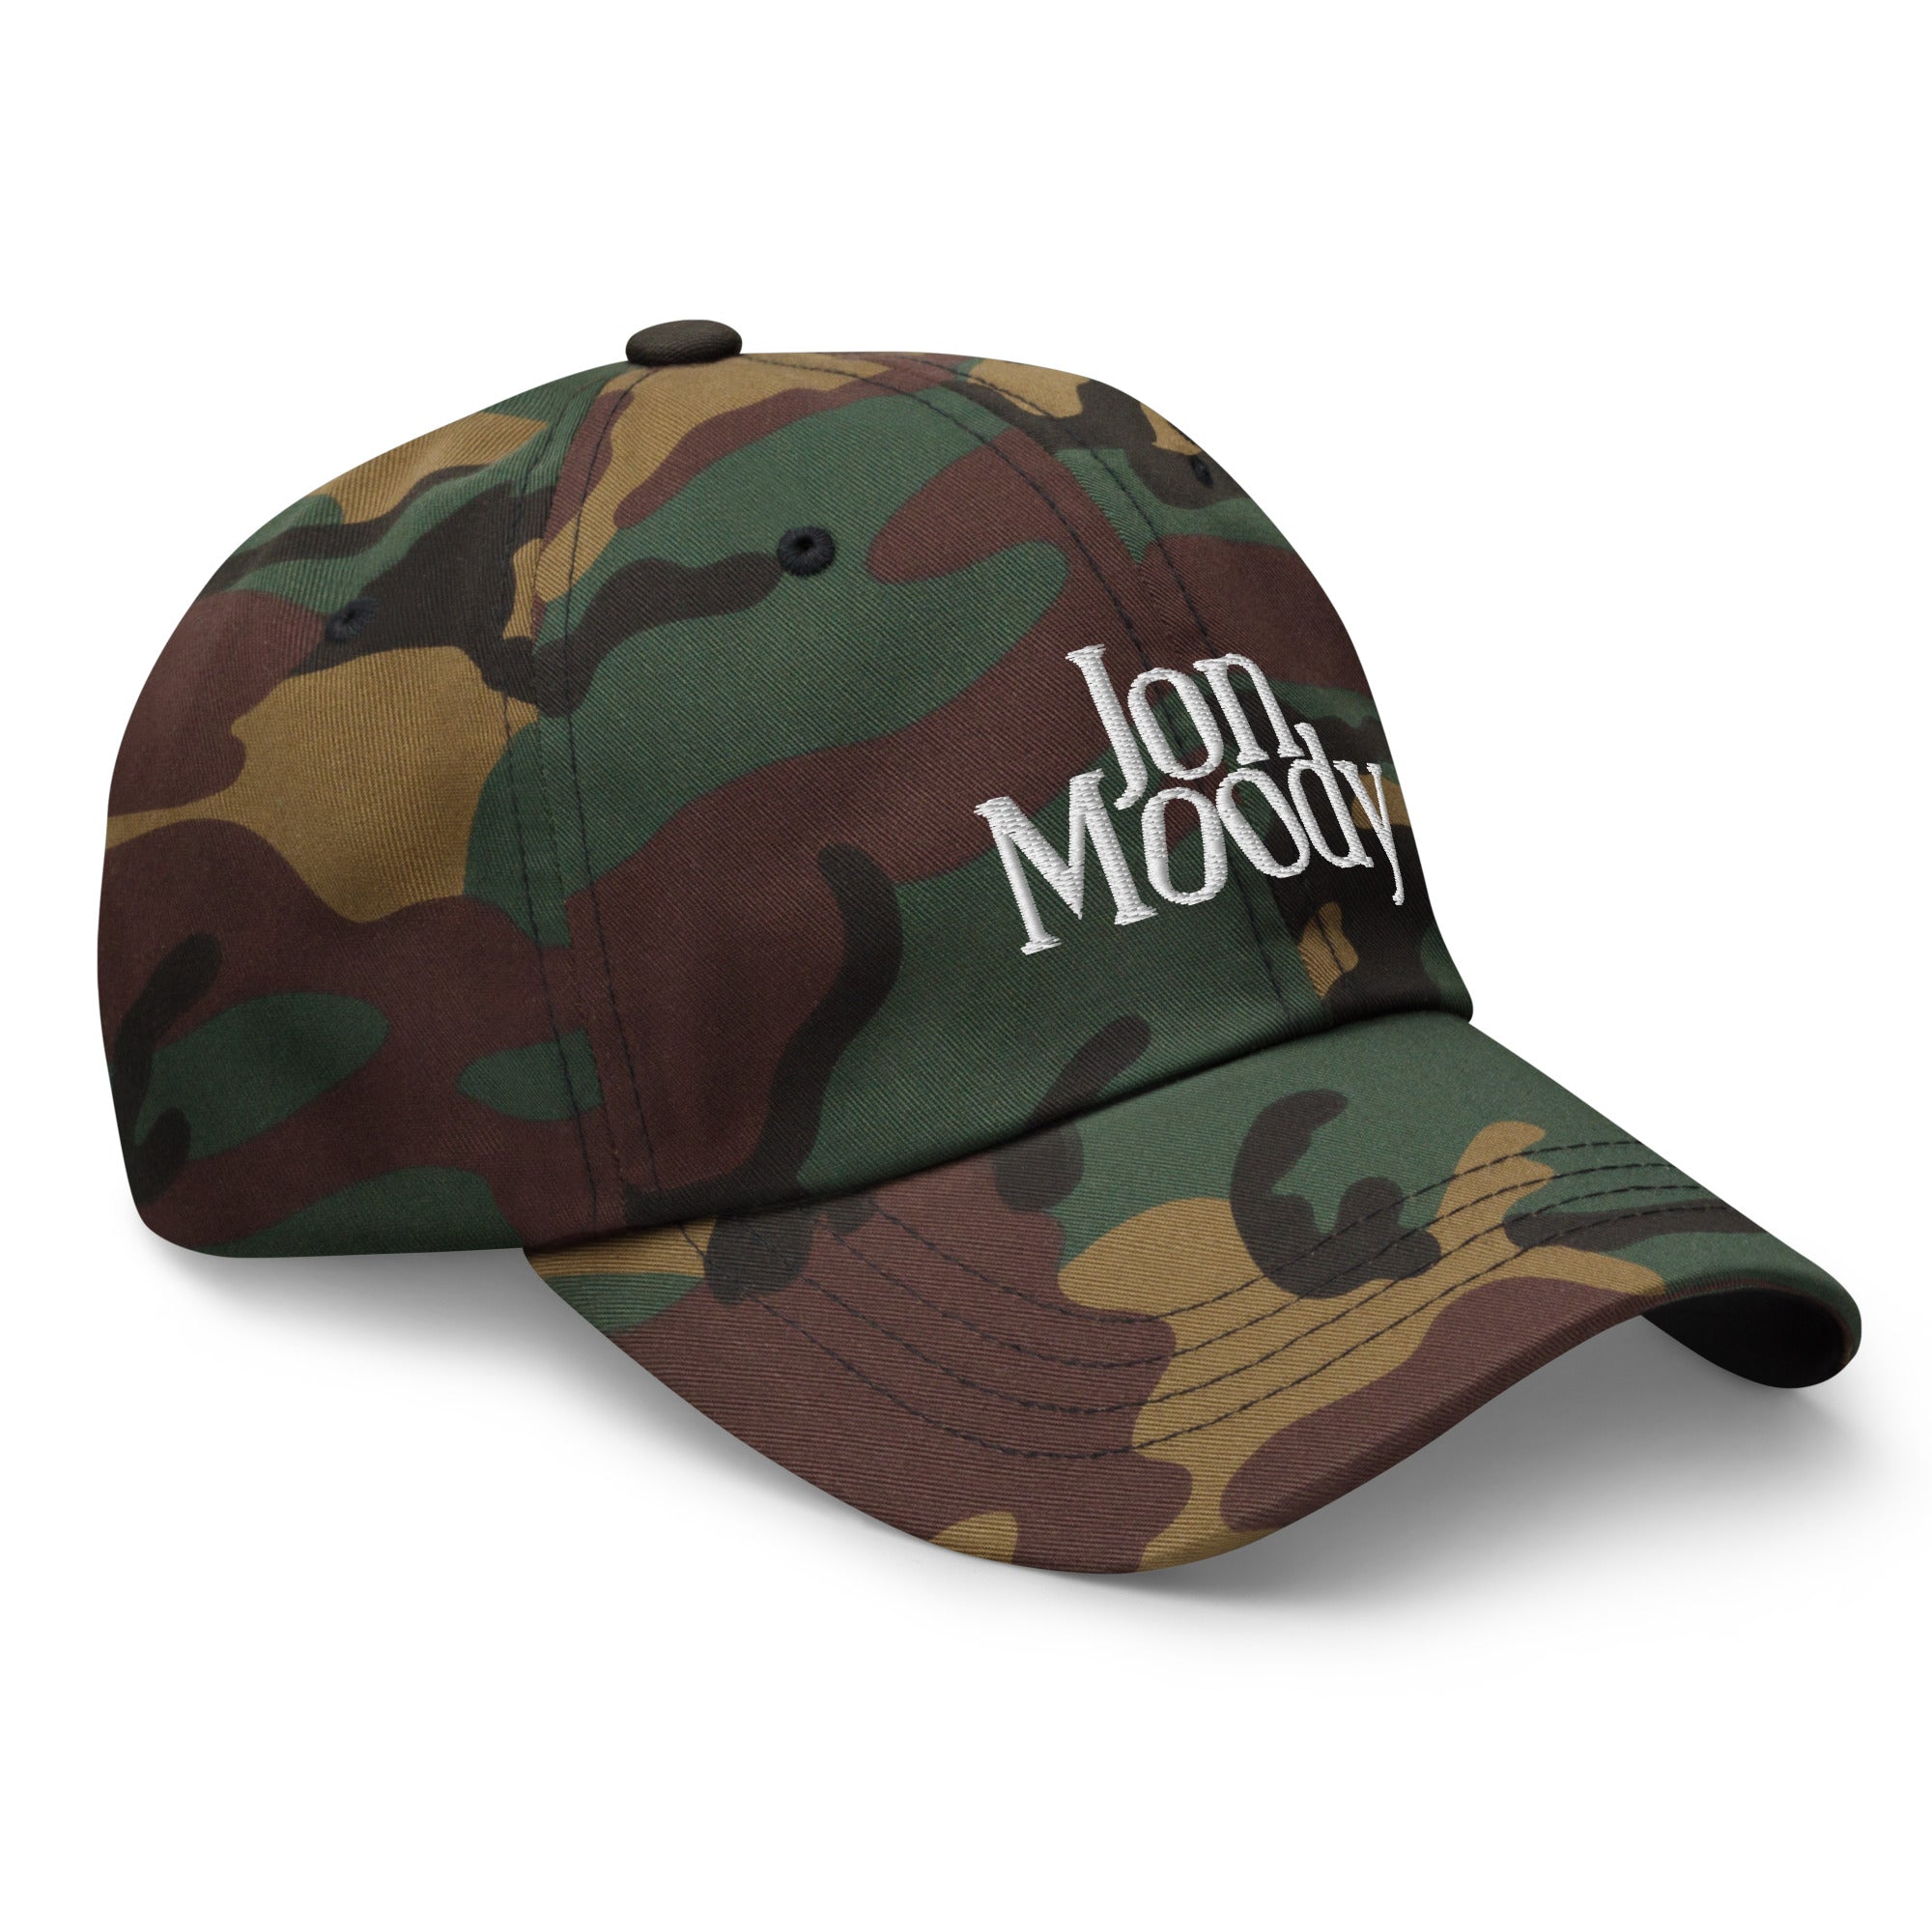 Jon Moody - Dad hat